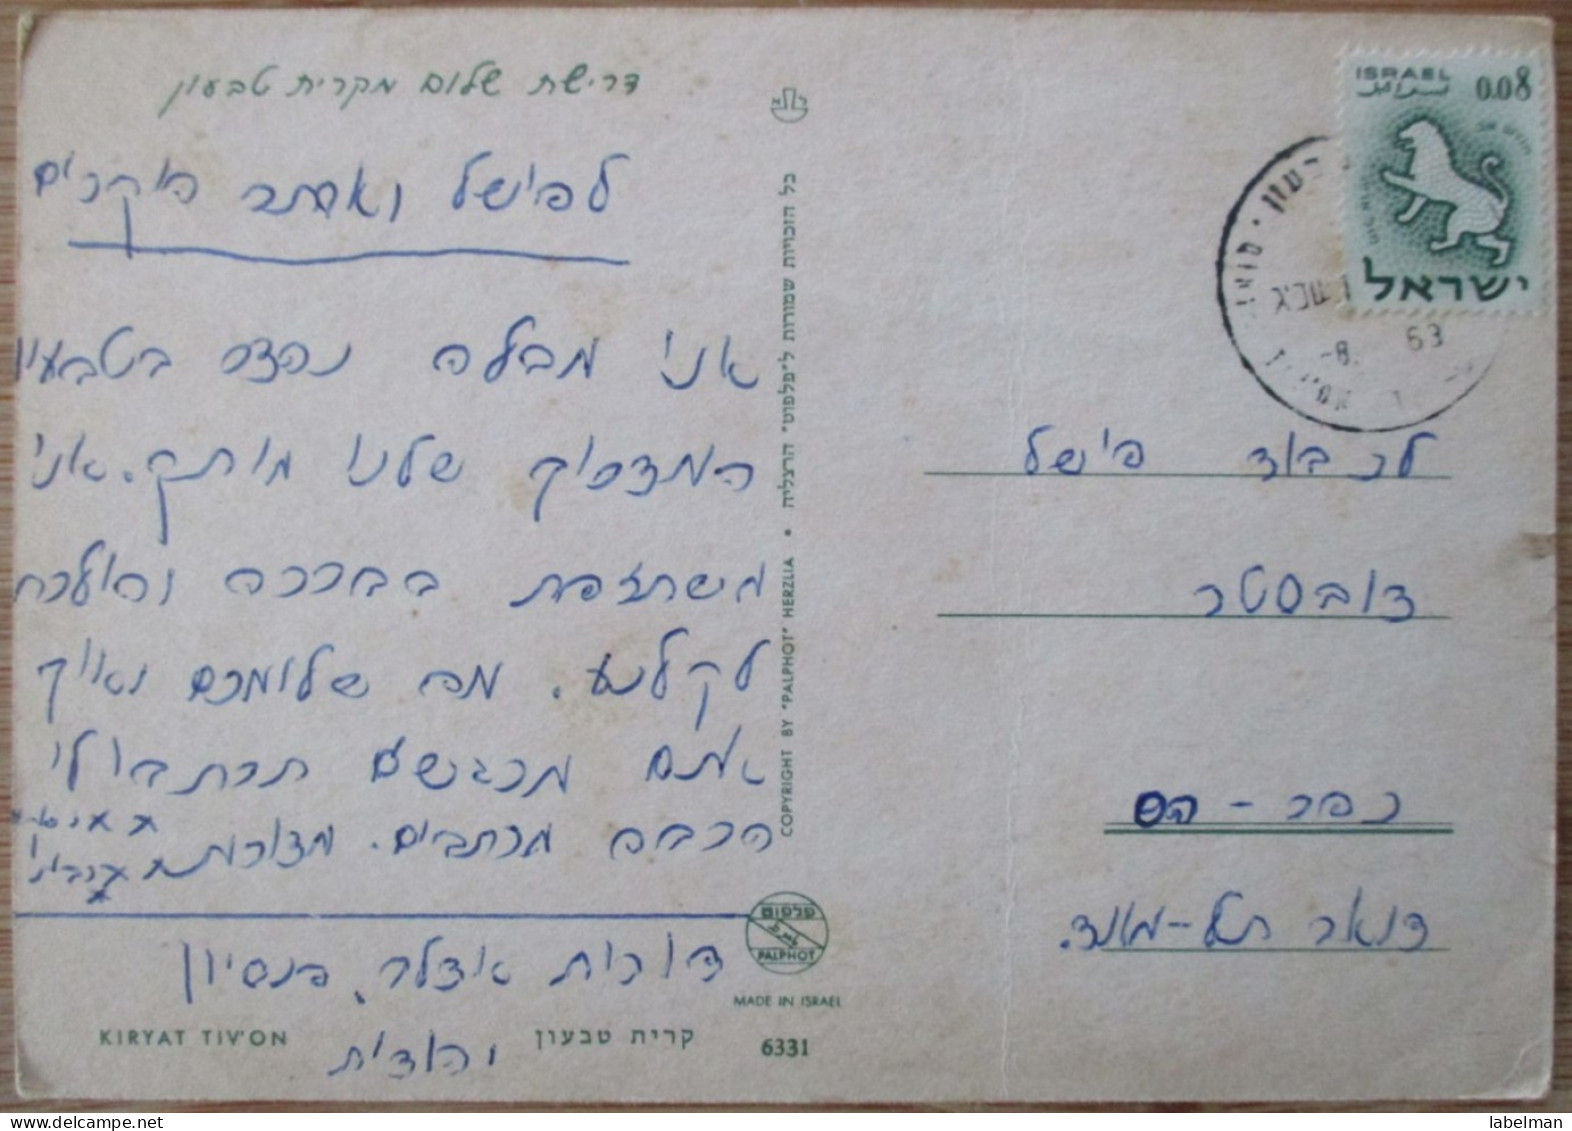 ISRAEL HAIFA GALILEE TIVON HOLIDAY RESORT CARTE POSTALE KARTE POSTCARD ANSICHTSKARTE CARTOLINA POSTKARTE CARD PC - Israel